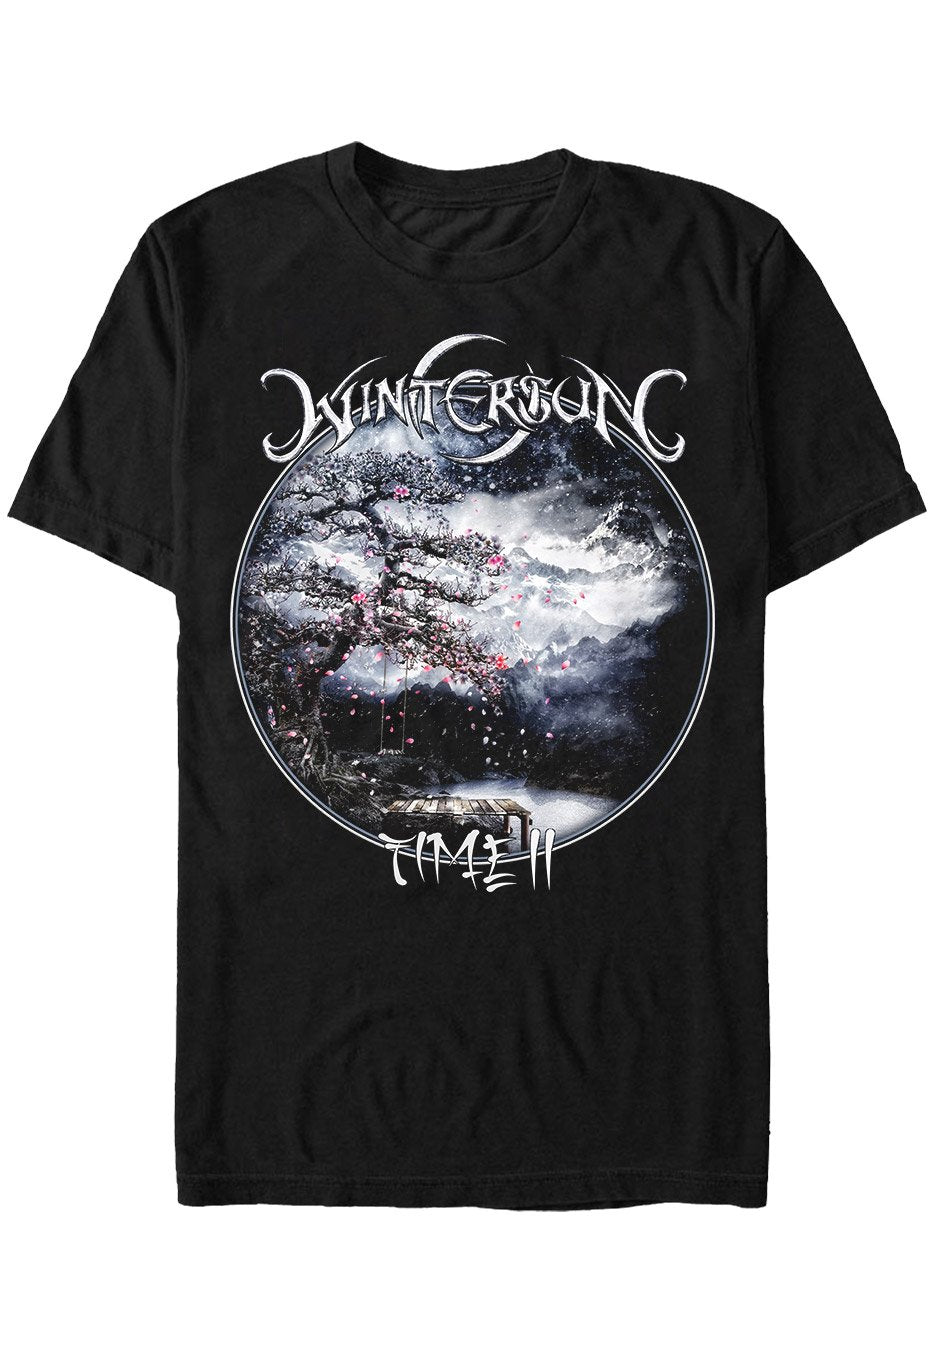 Wintersun - Time II - T-Shirt | Neutral-Image